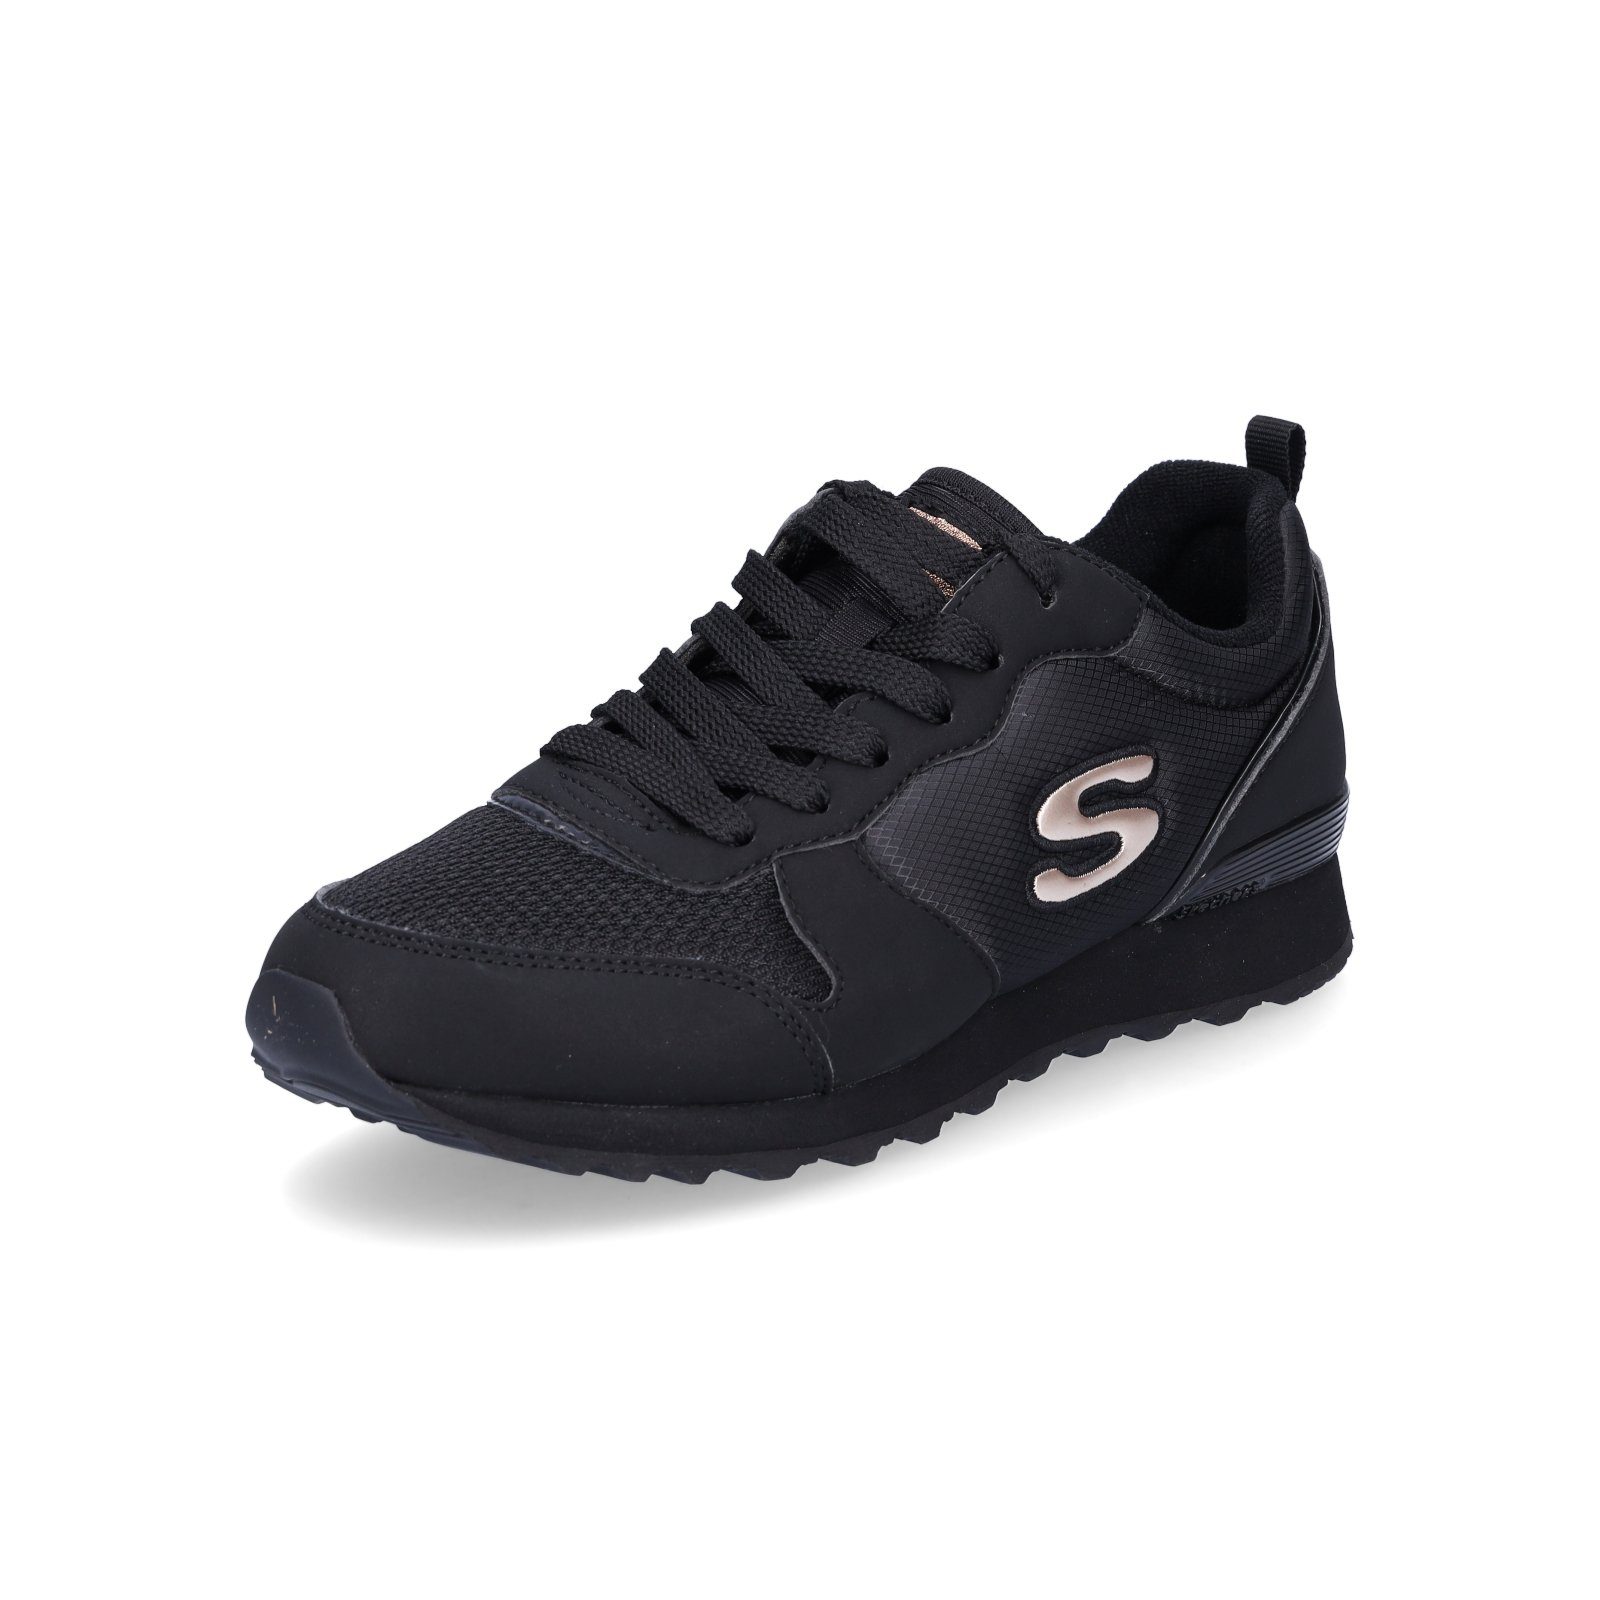 85-2KEWL Skechers Sneaker black/black OG Sneaker Damen schwarz Skechers